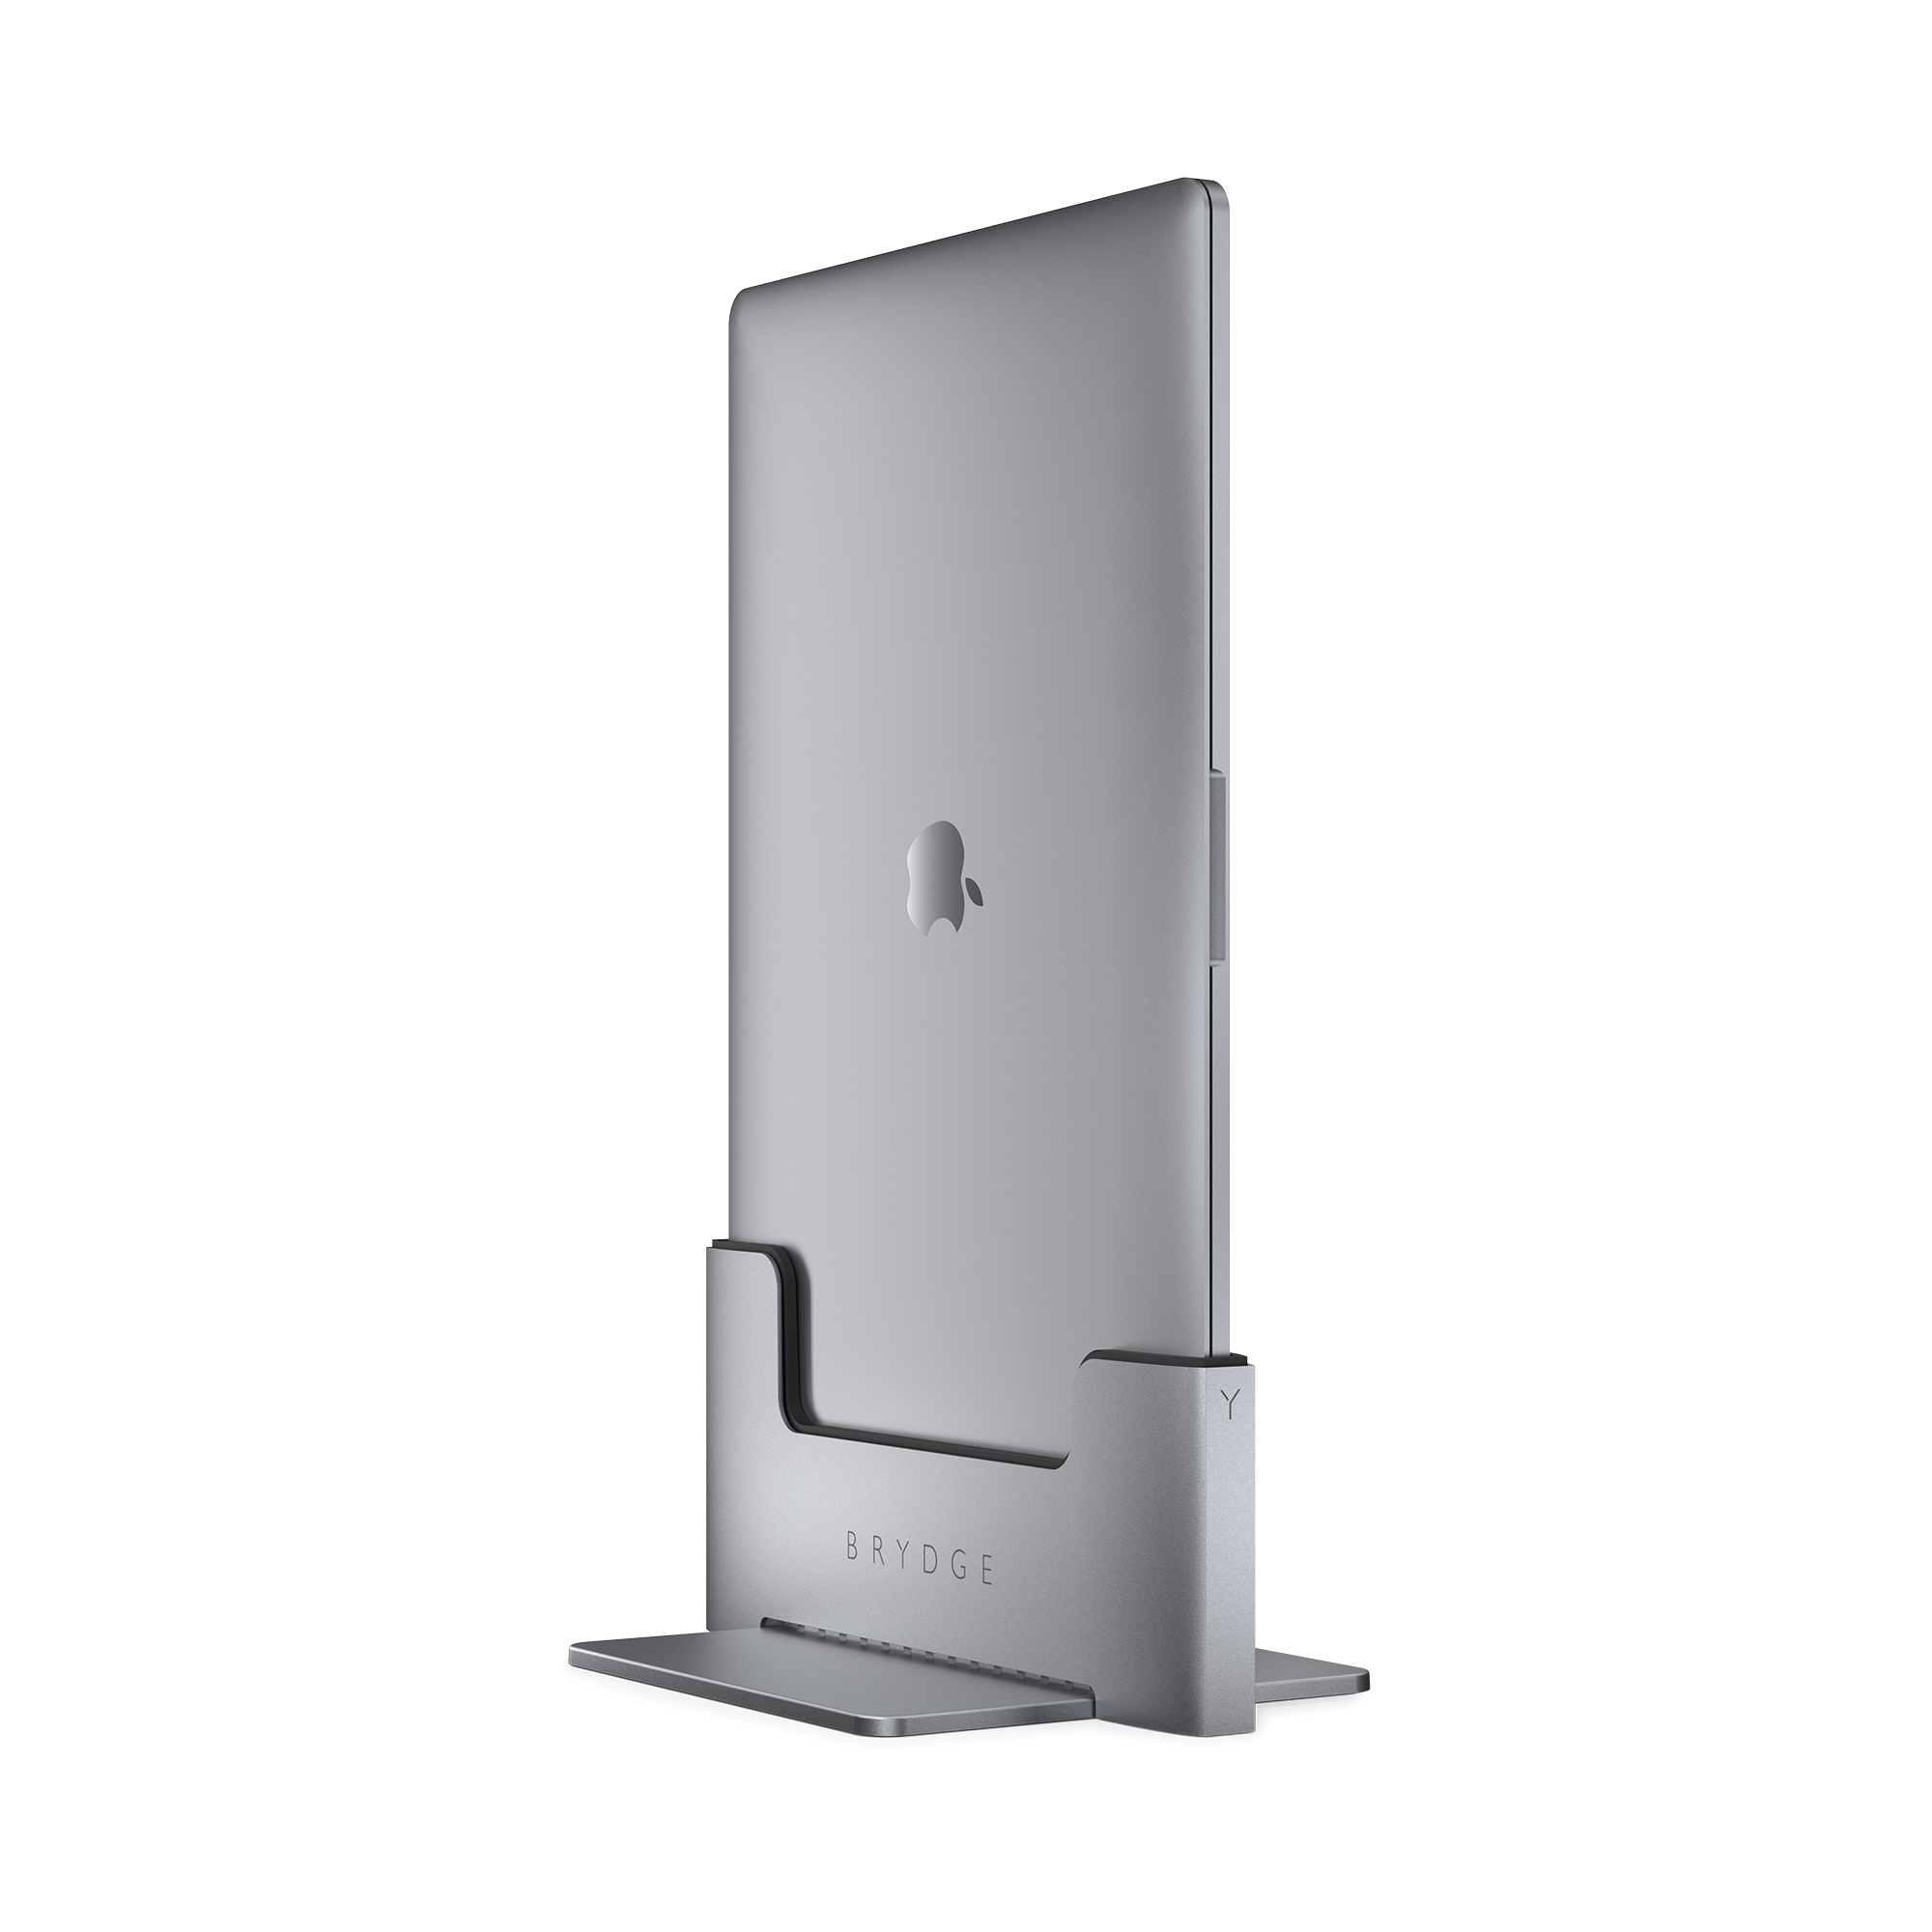 2016 macbook pro vertical stand